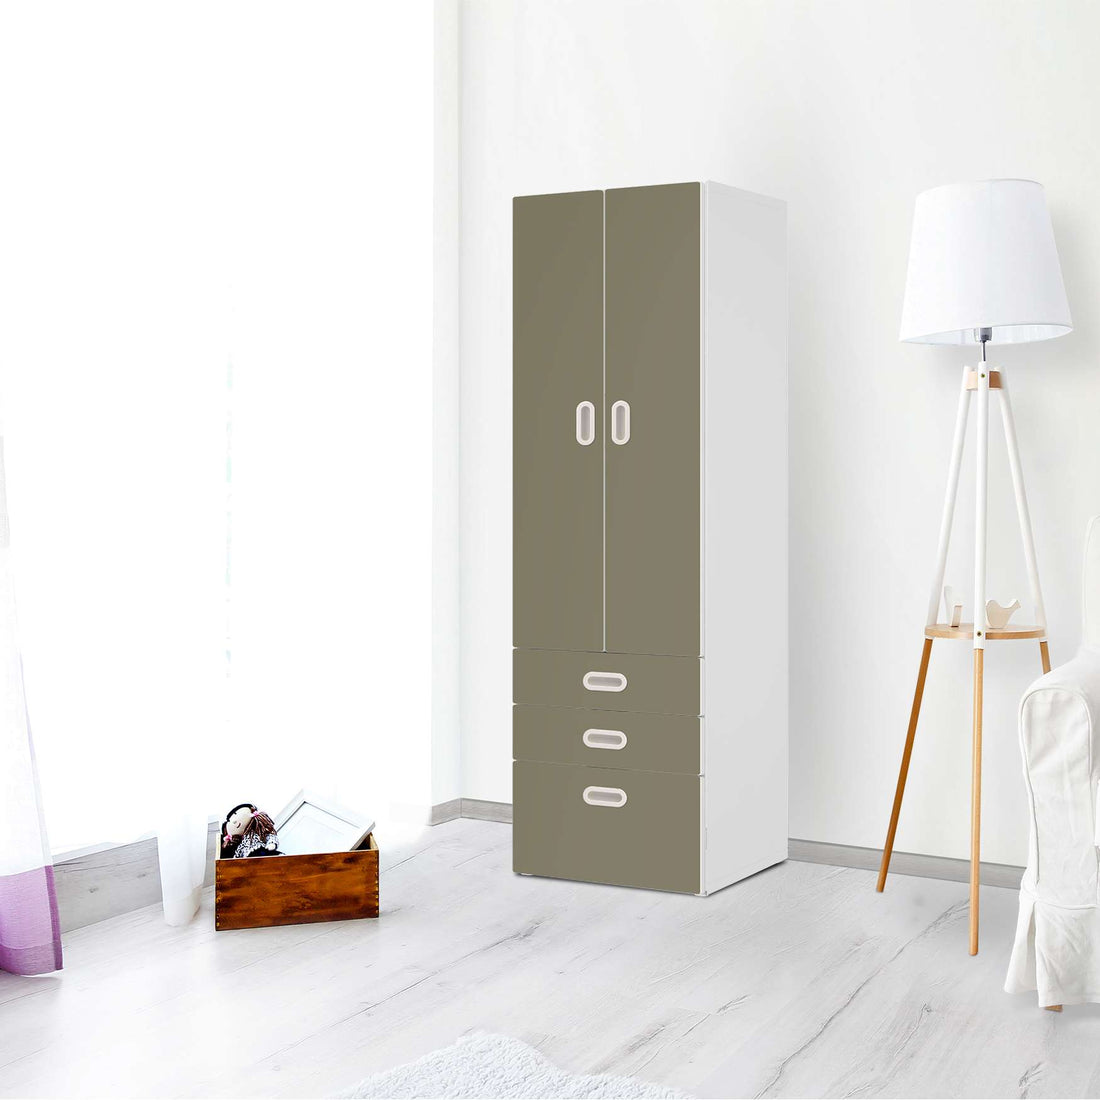 Klebefolie Braungrau Light - IKEA Stuva / Fritids kombiniert - 3 Schubladen und 2 große Türen - Kinderzimmer